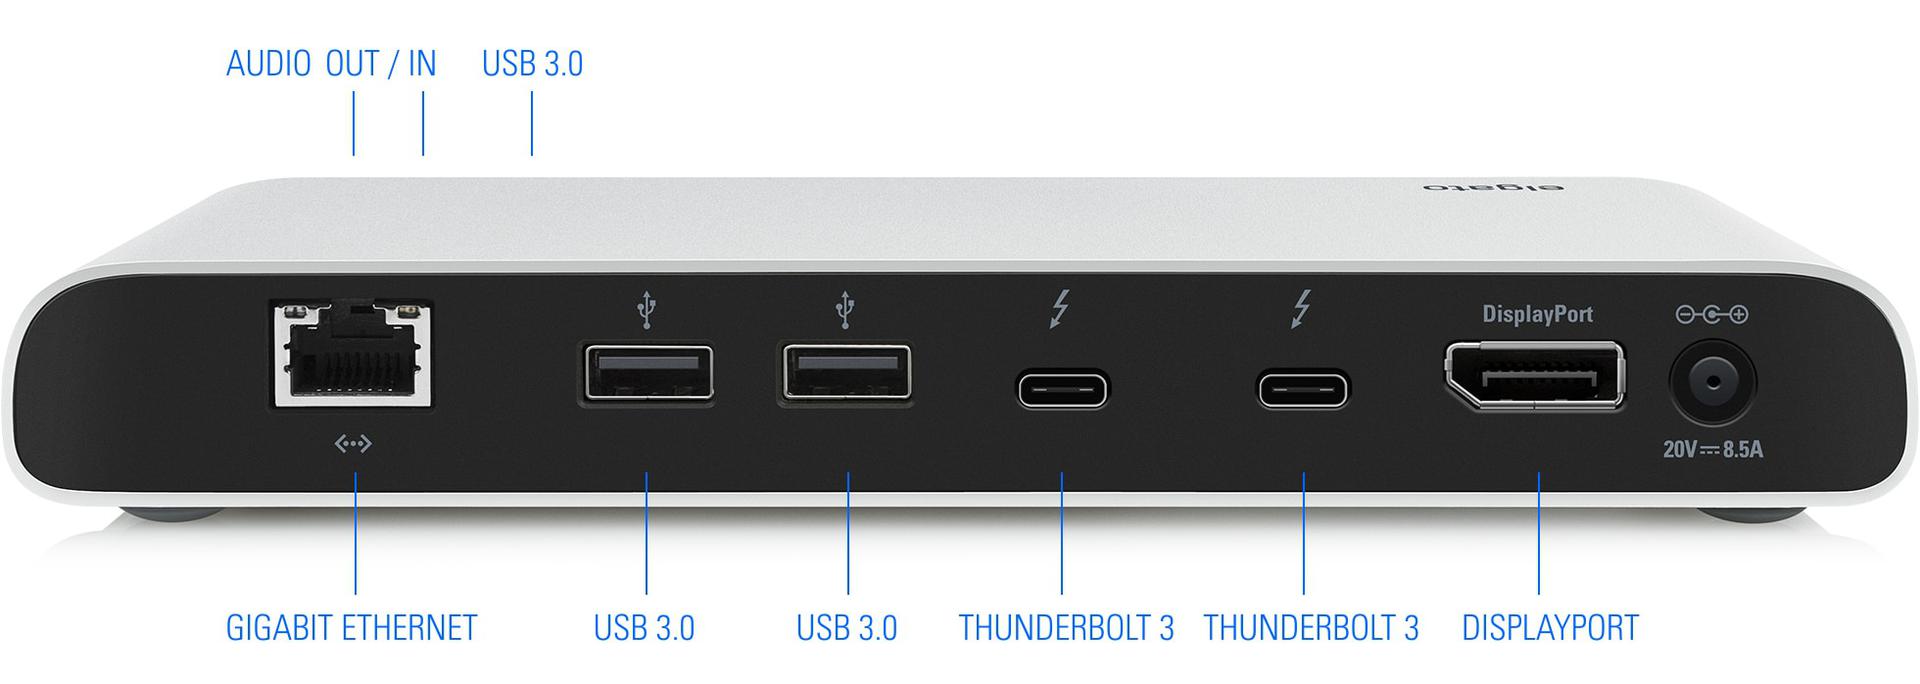 aluminum chassis. USB- C dual 4K support Gigabit Ethernet 4x USB 3.0,SD/Micro SD Card Reader Elgato Thunderbolt 3 Pro Dock With 50 cm Thunderbolt cable Audio I/O 40Gb/s 2x Thunderbolt 3 